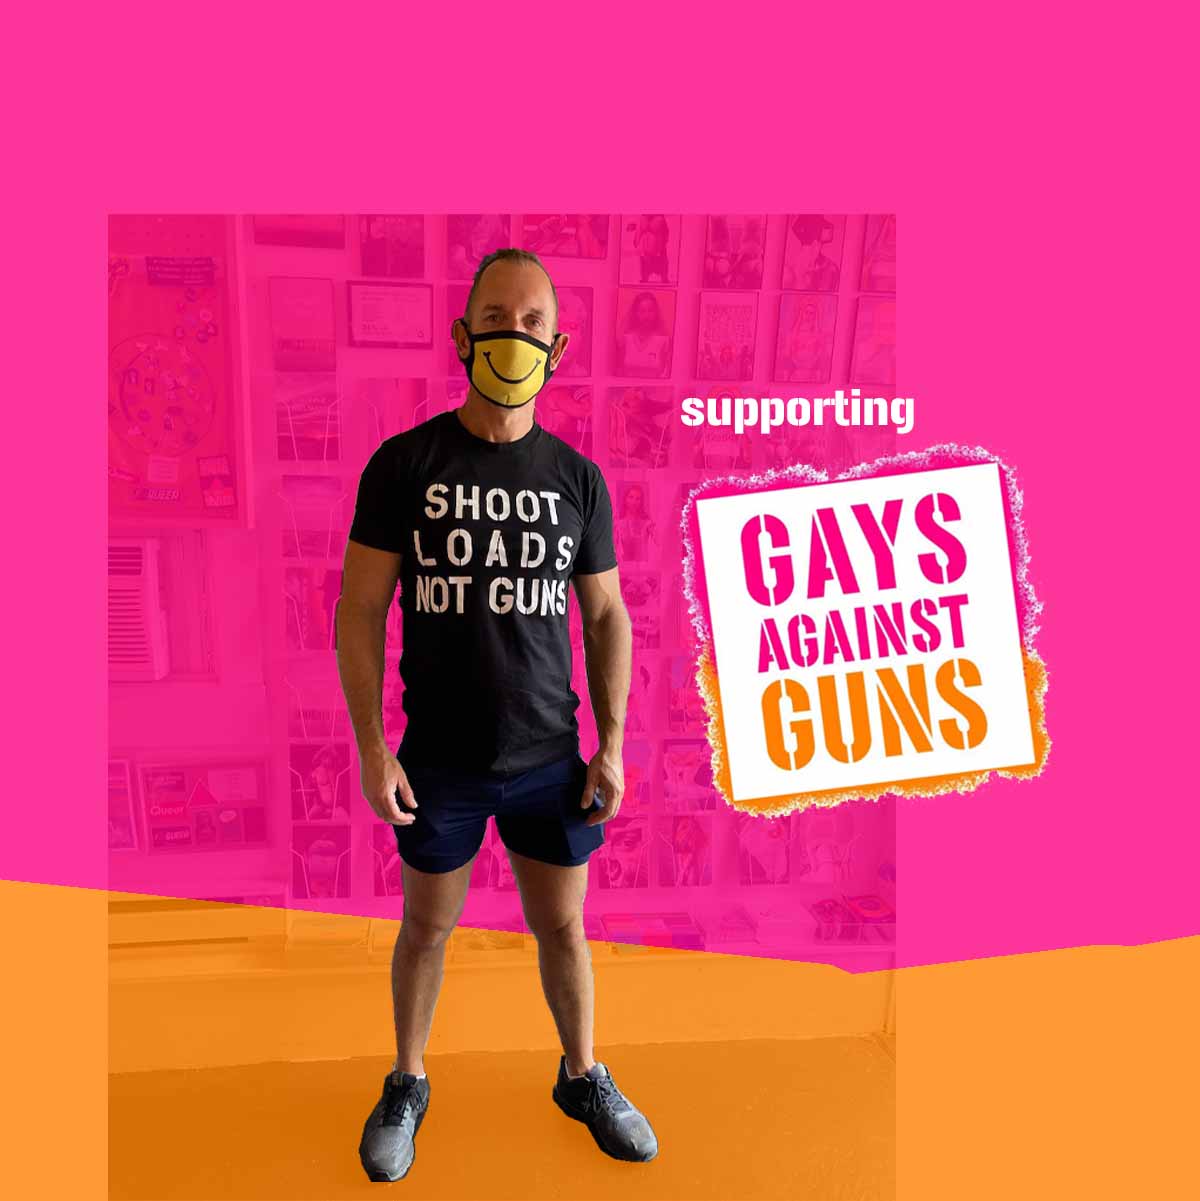 shoot loads not guns supporting gays against guns